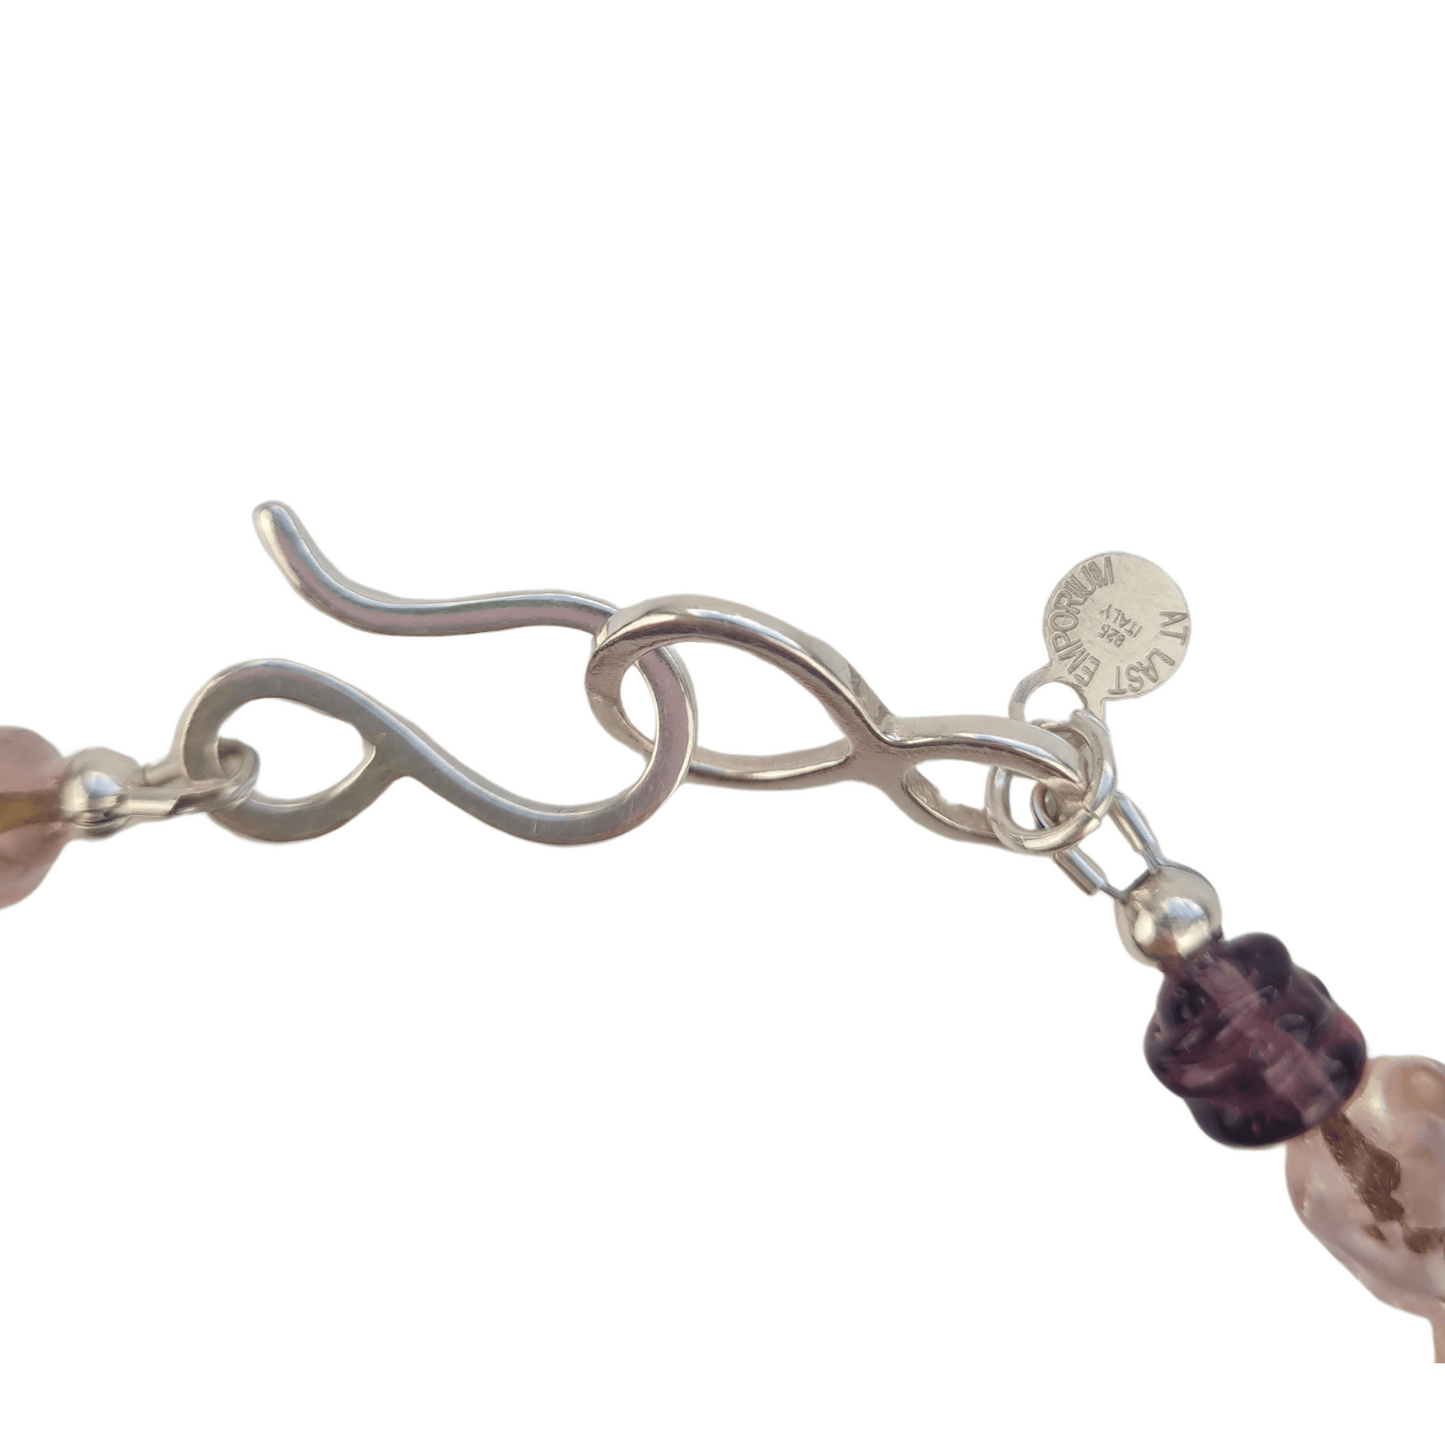 Millefiori Vintage Beads Necklace